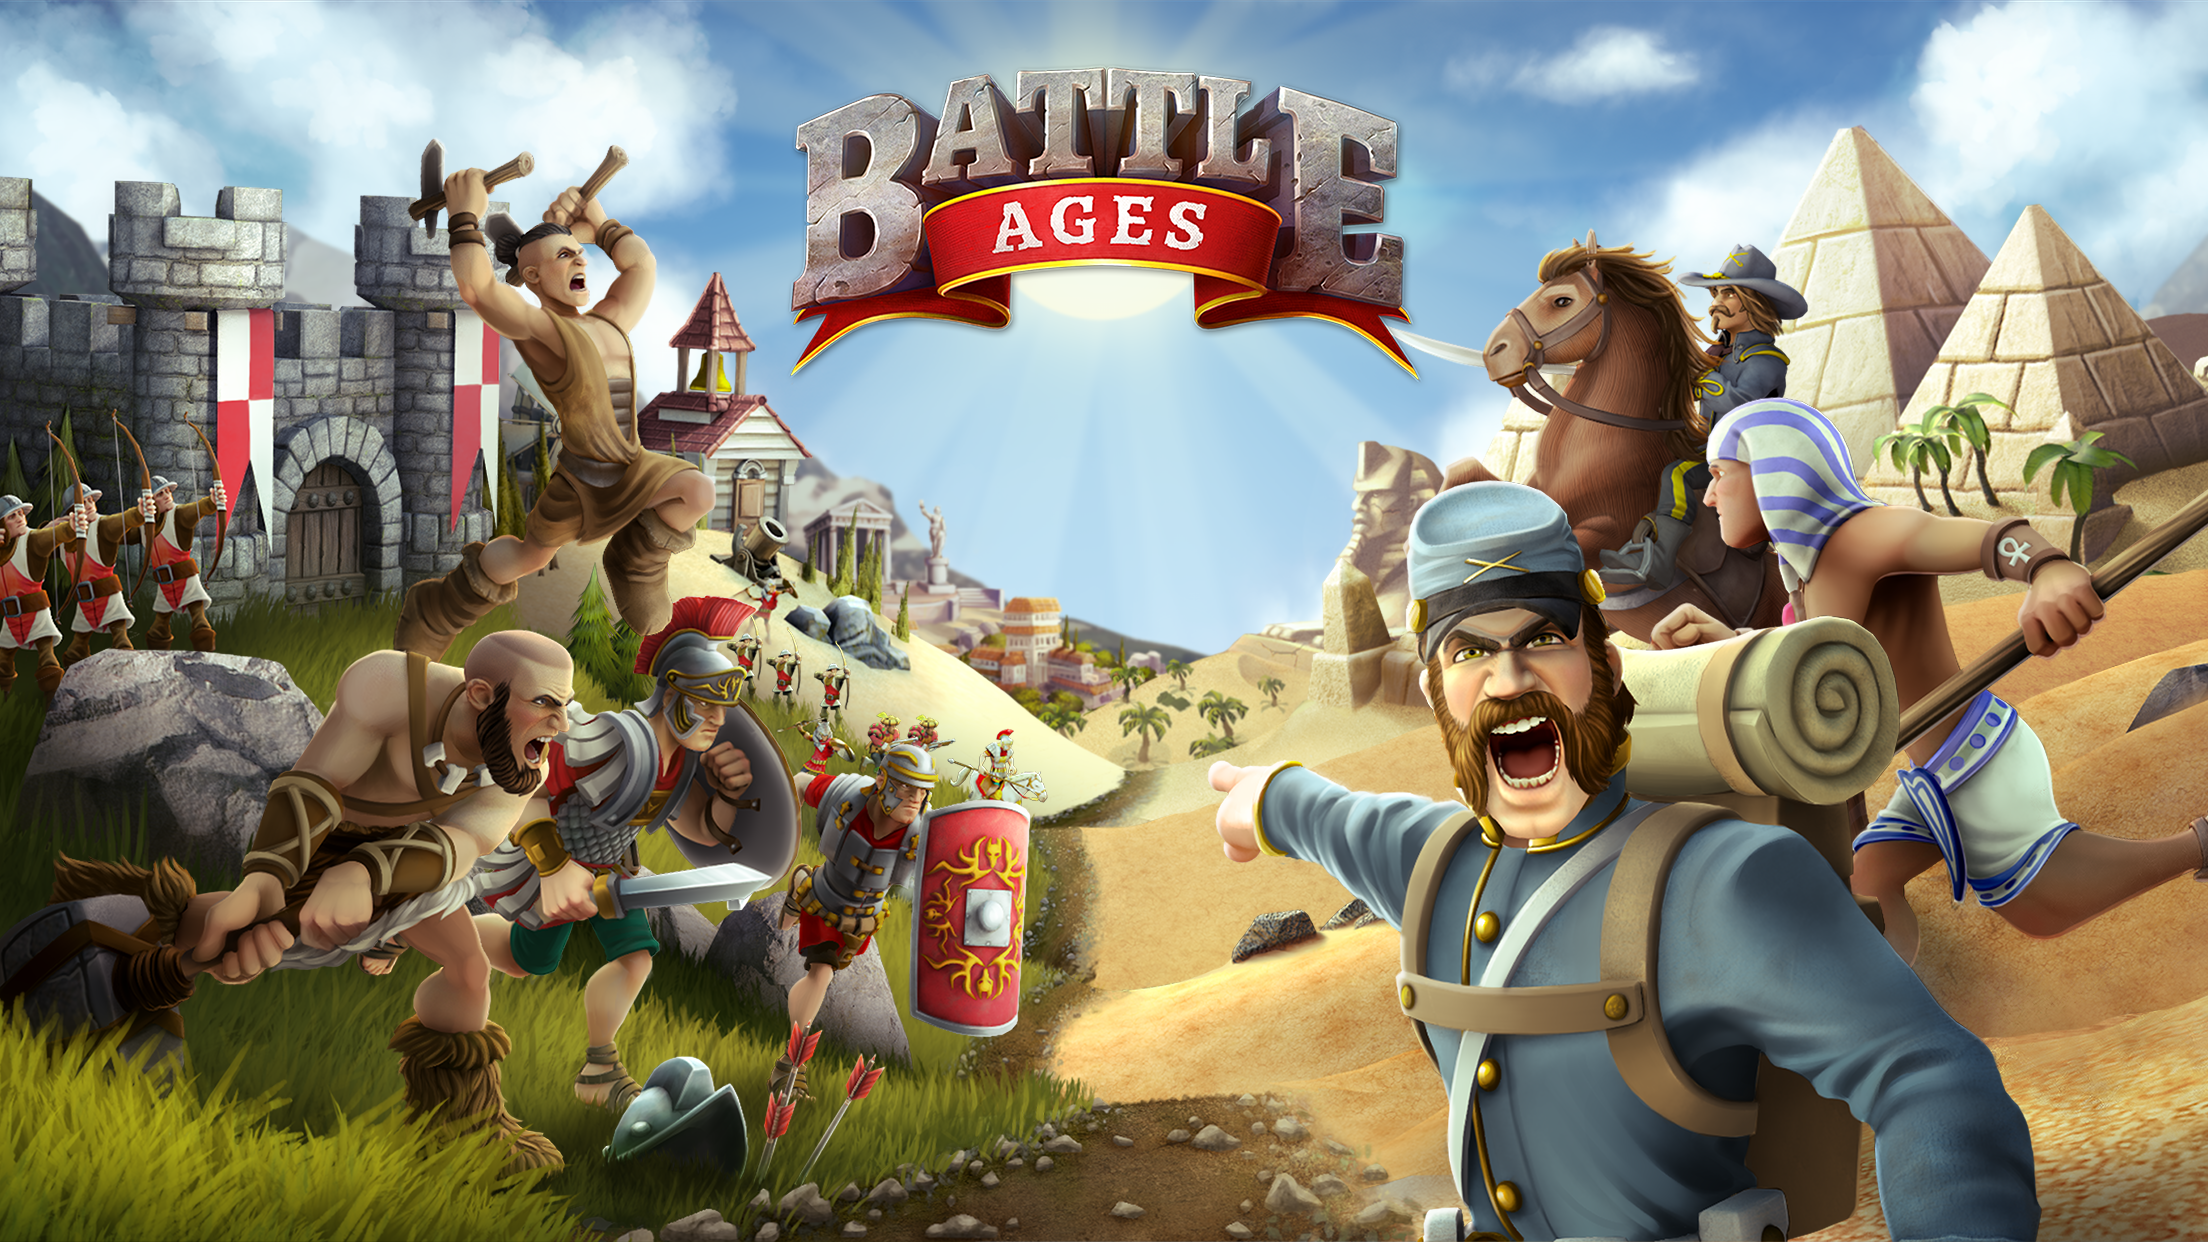 Screenshot 1 of Edades de batalla 3.1.2